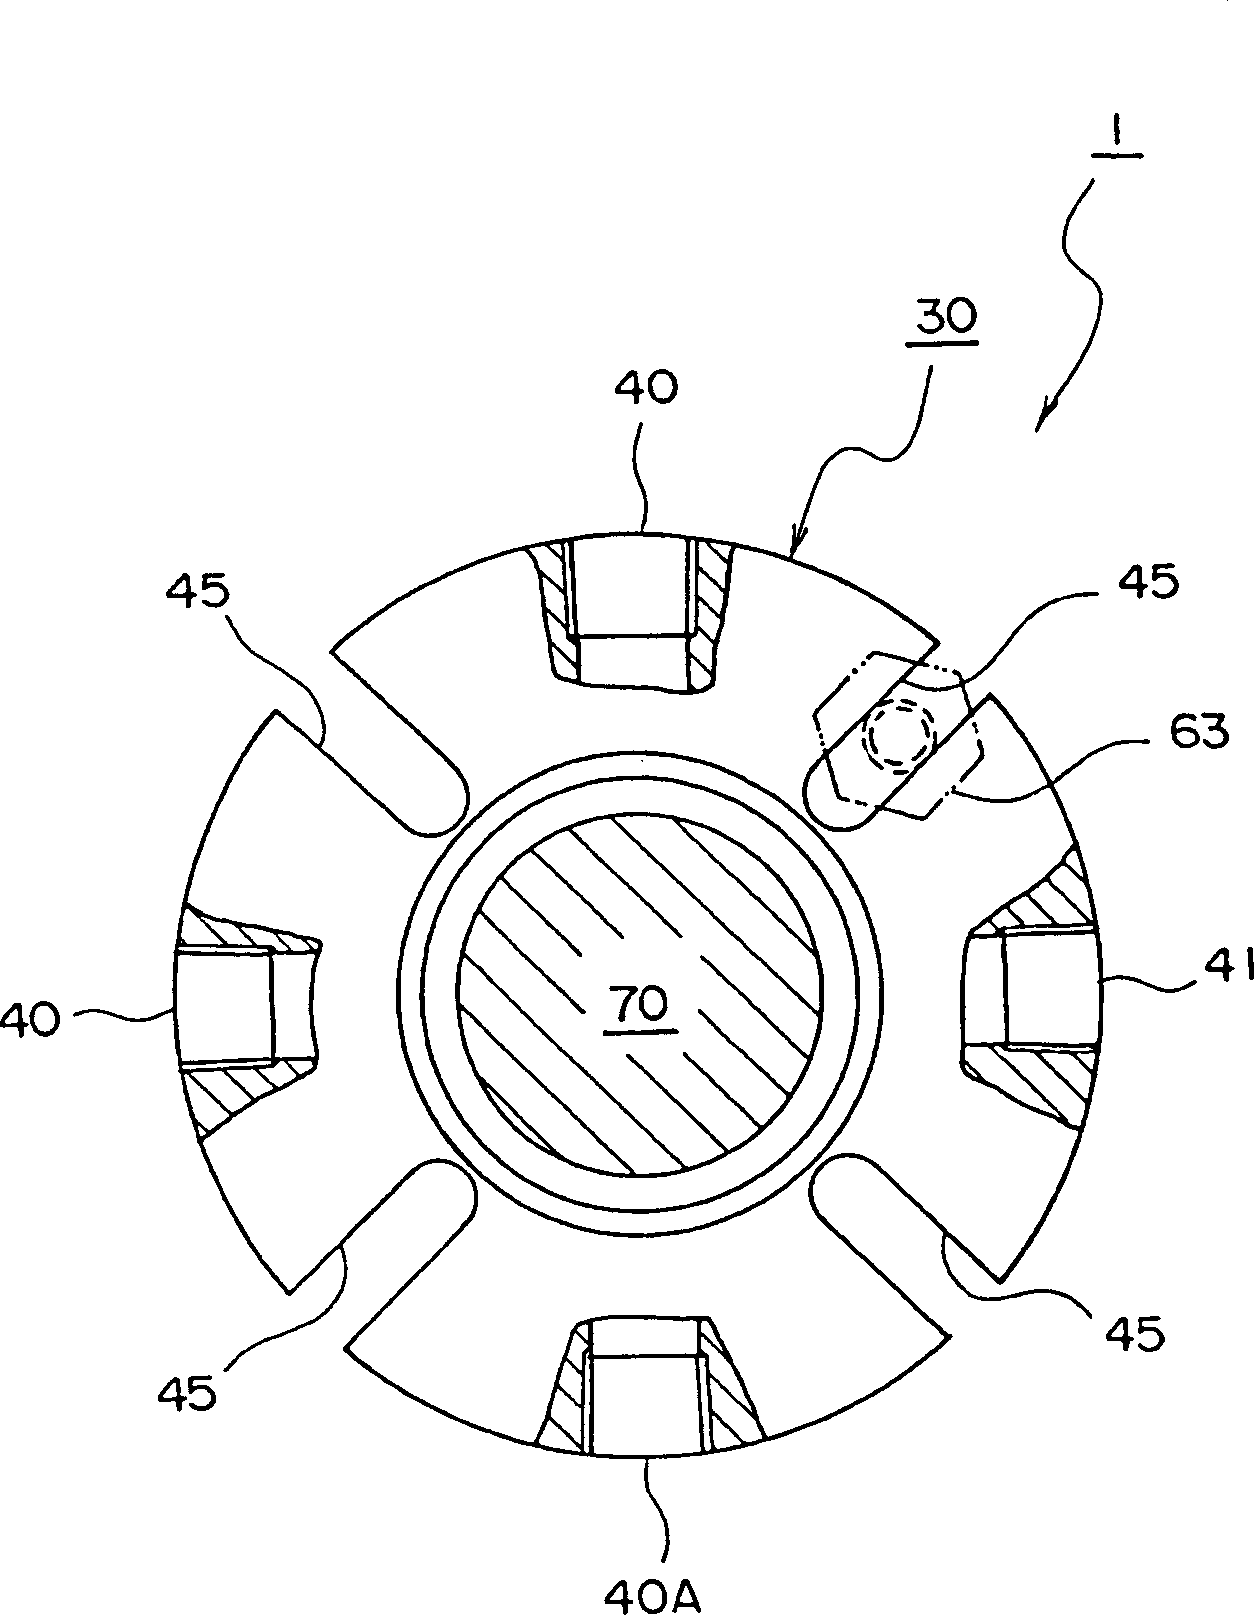 Mechanical seal device